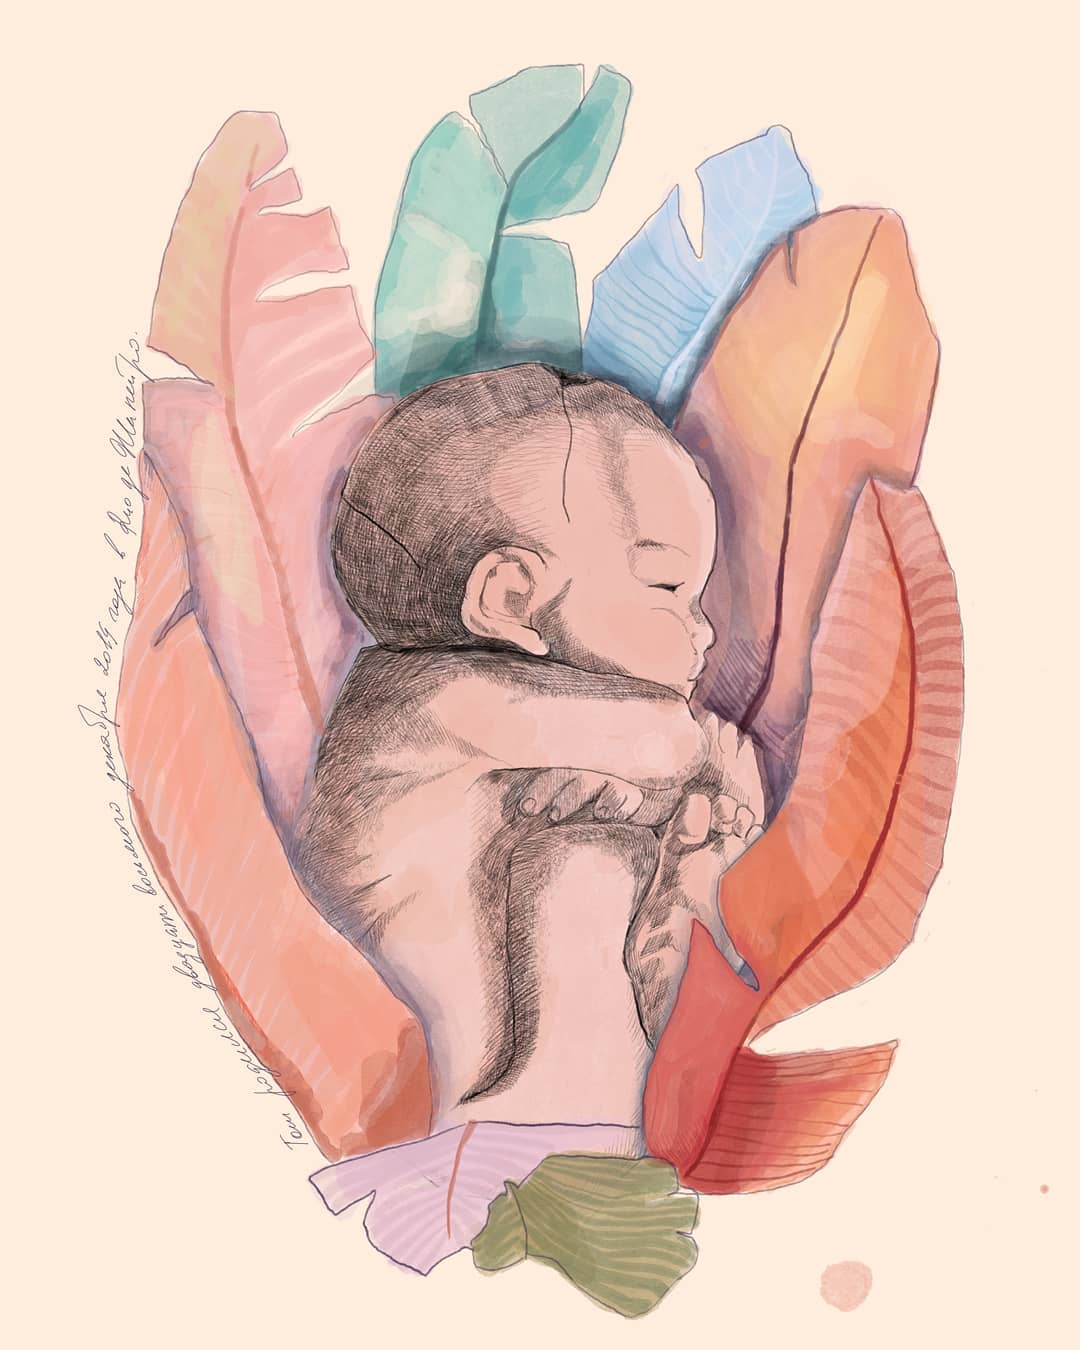 Digital Watercollor illustration of a baby